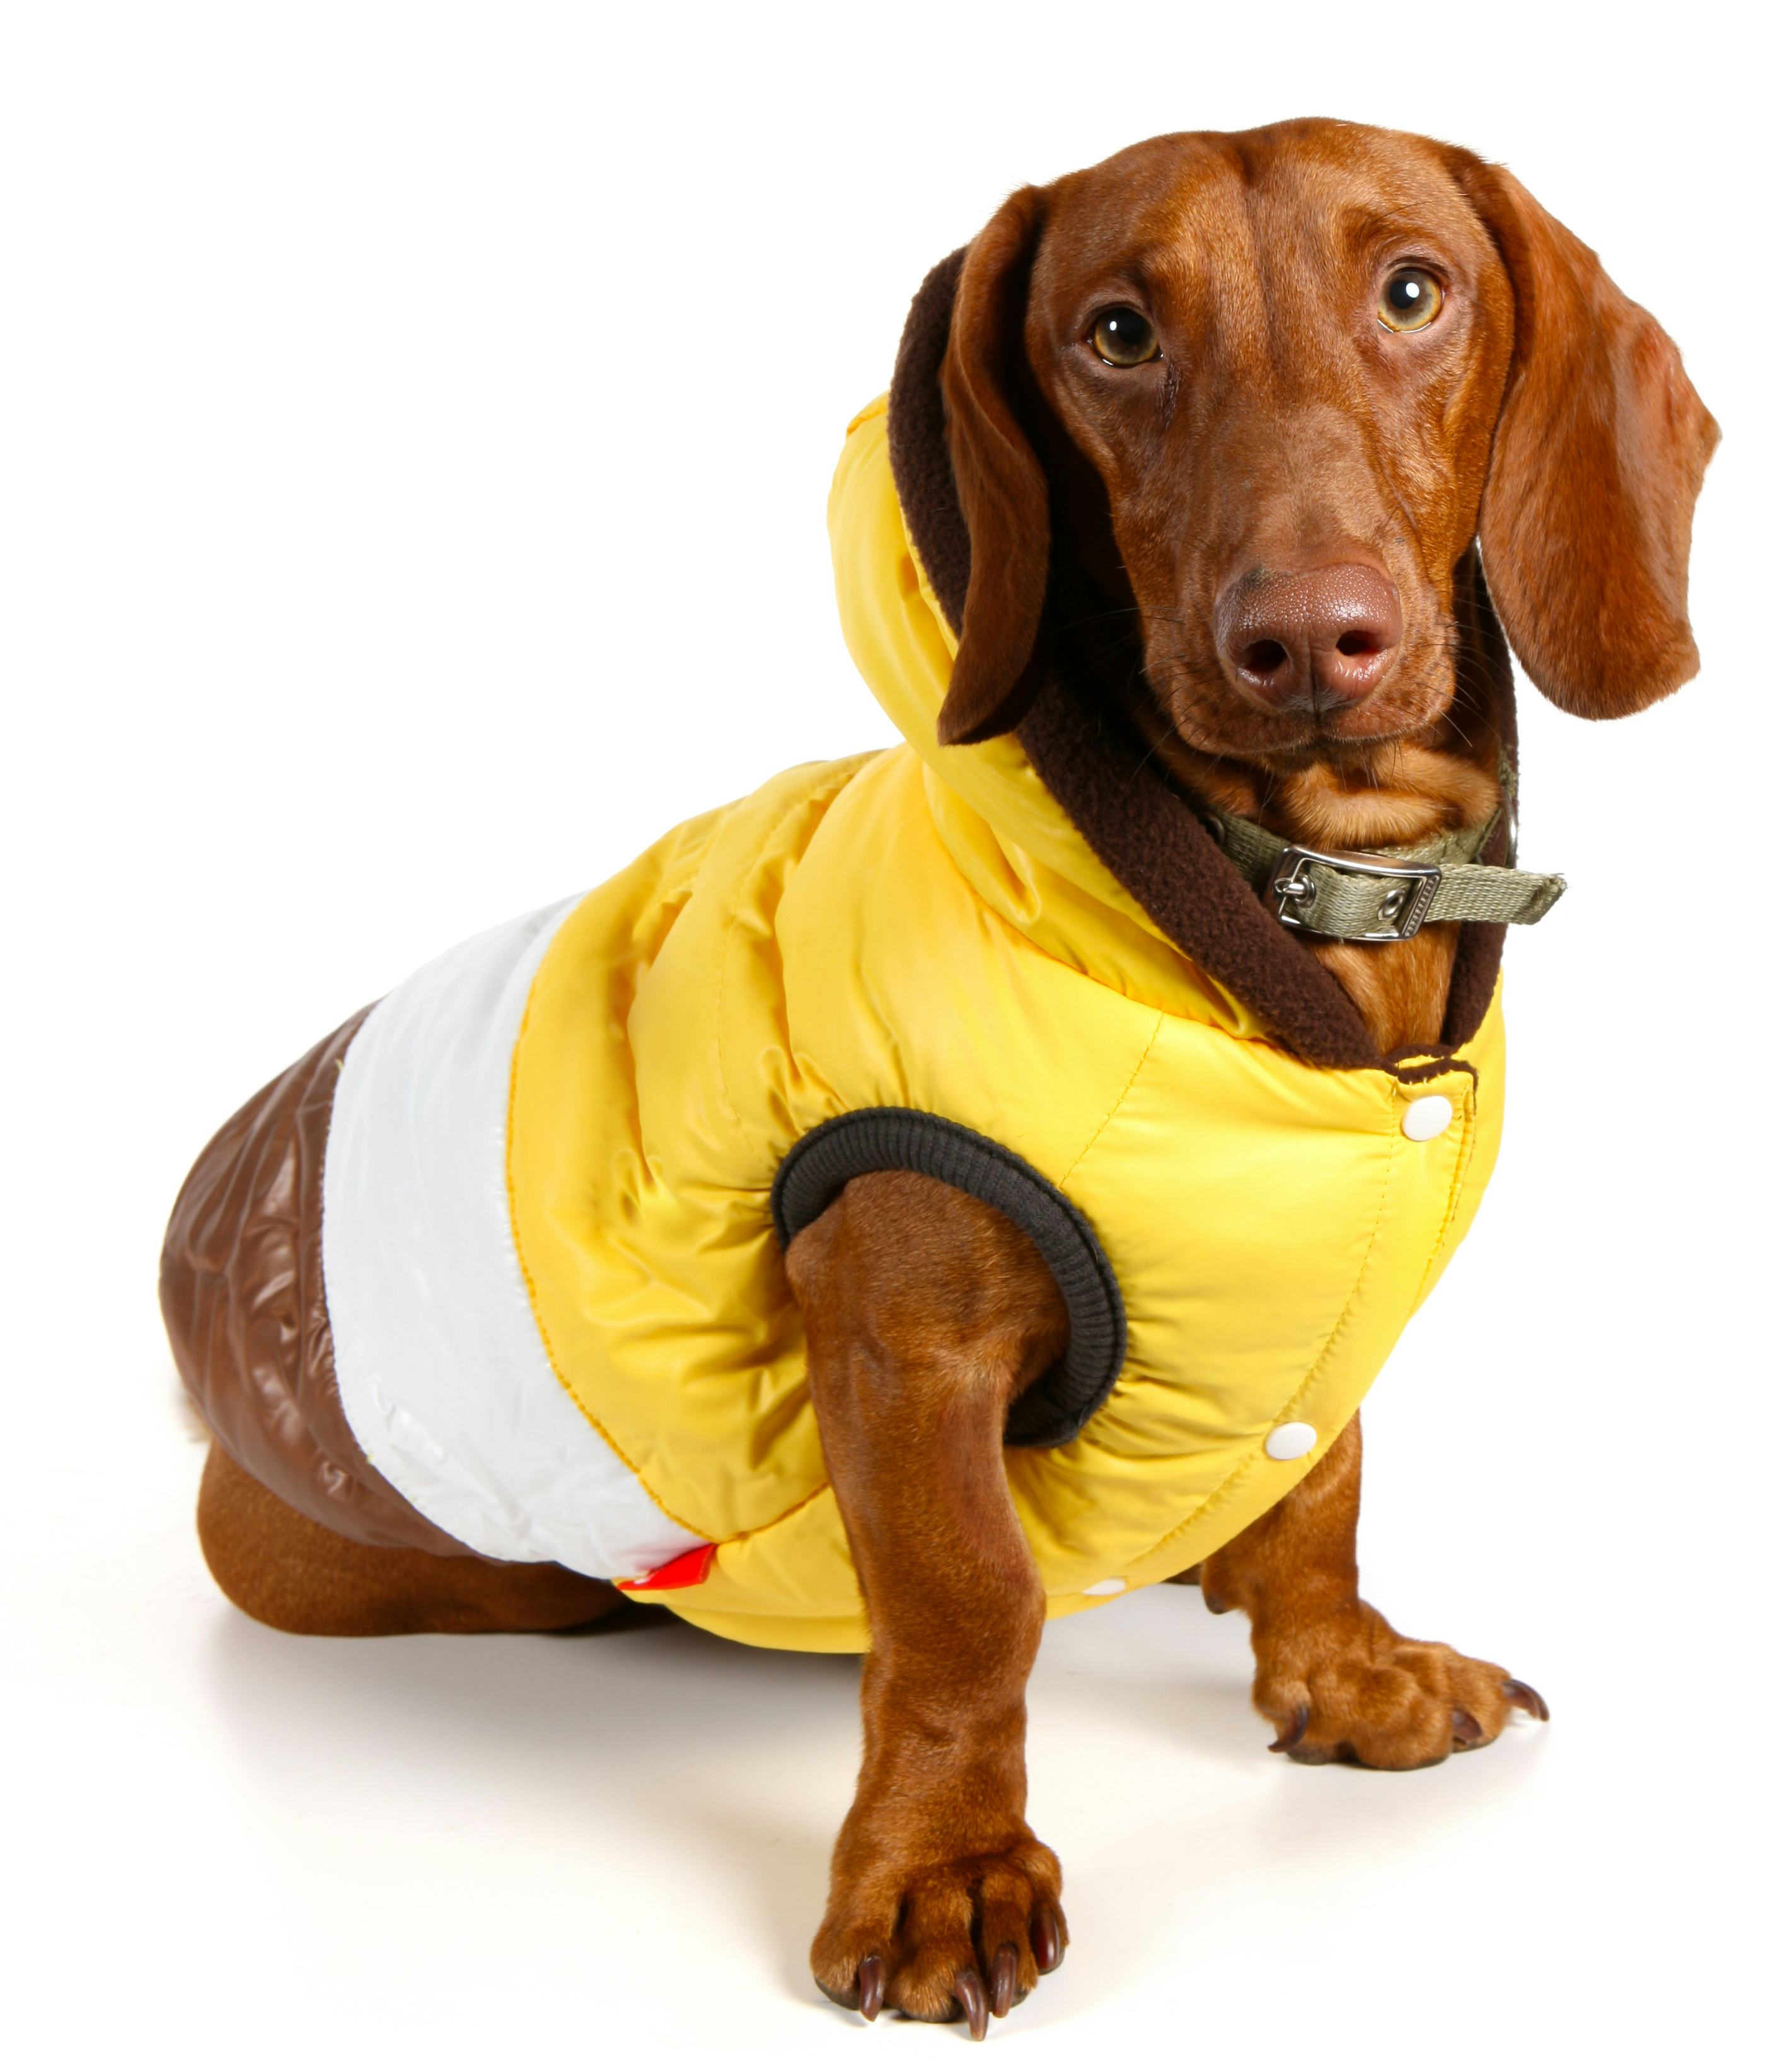 medium sized dog in a yellow jacket